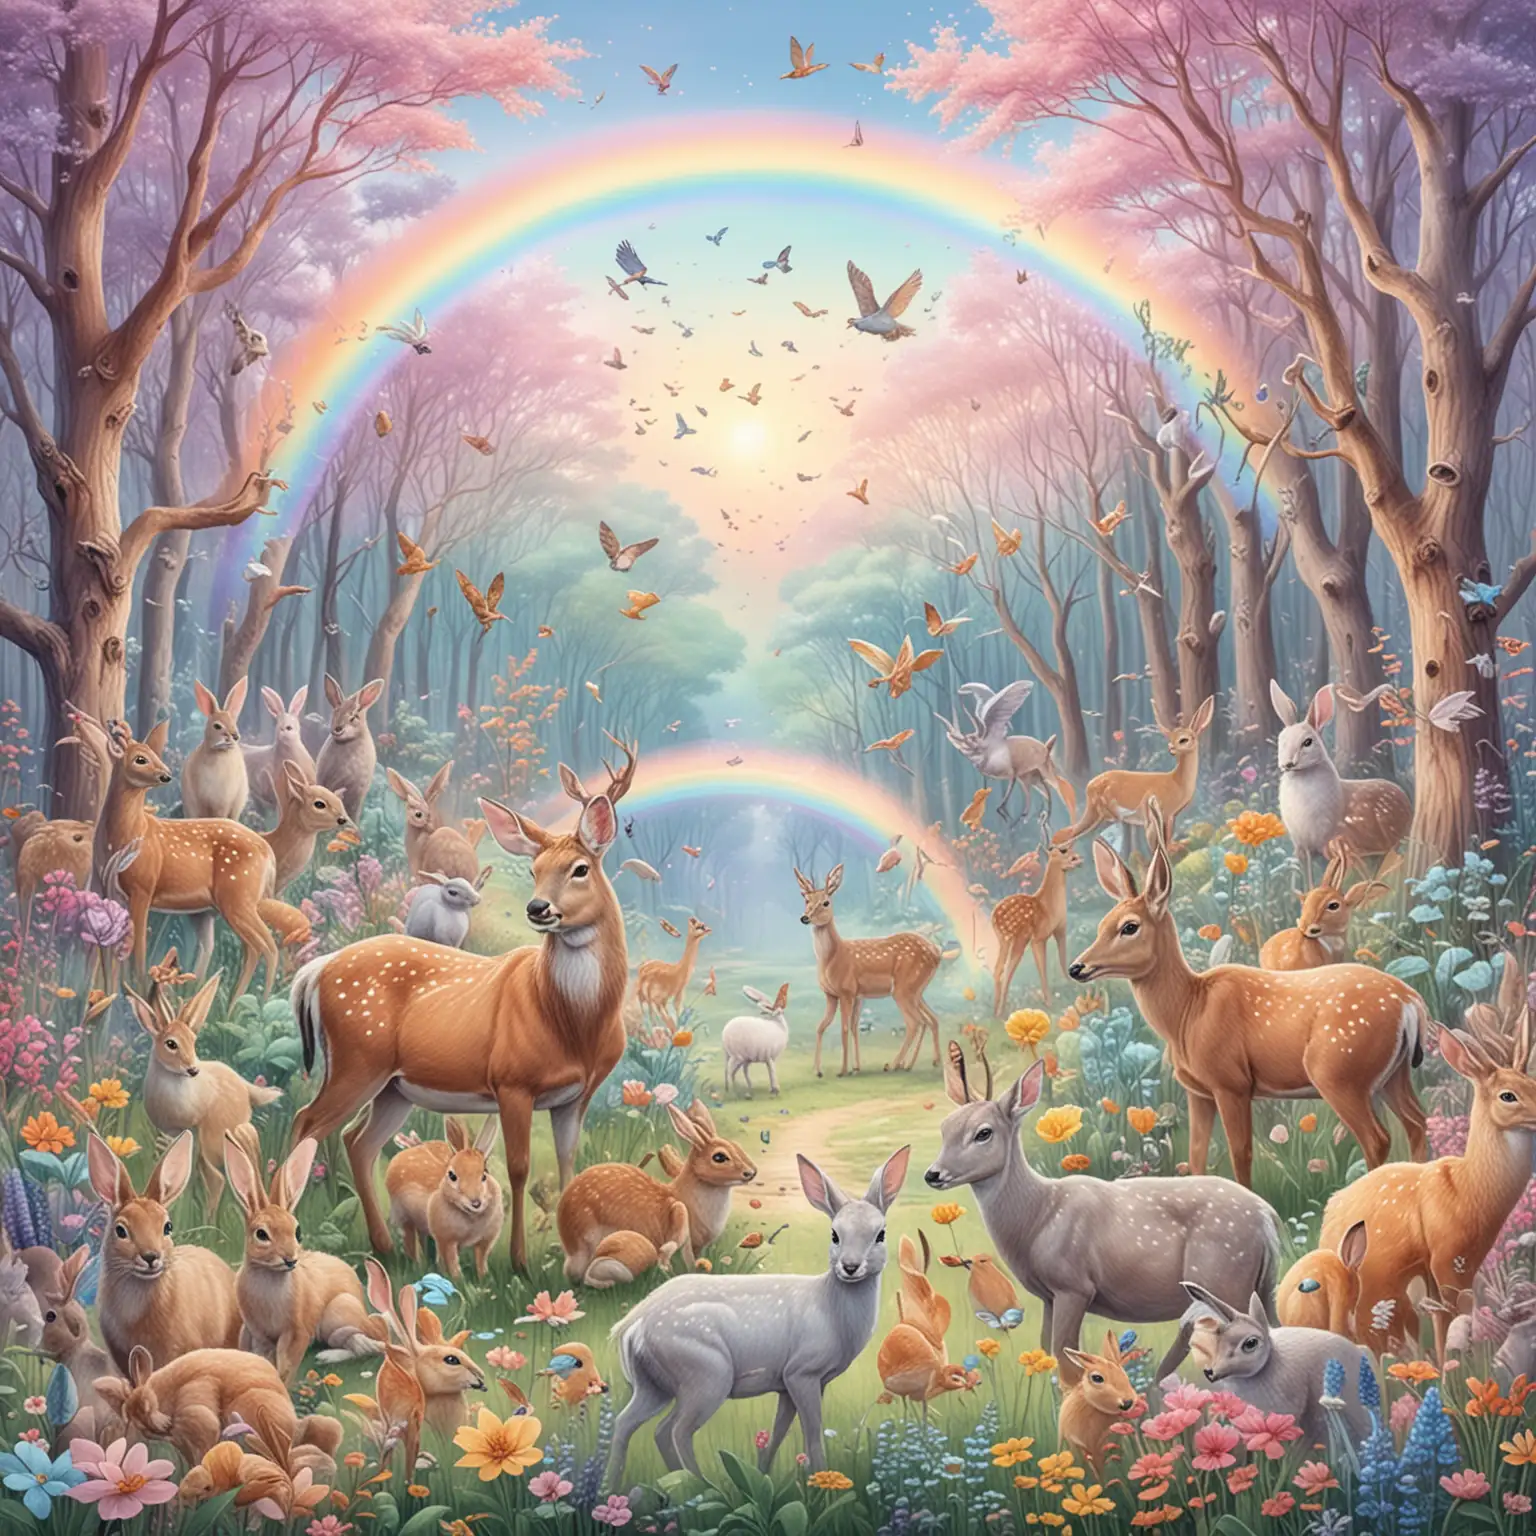 Magical Pastel Rainbow Forest with Joyful Wildlife